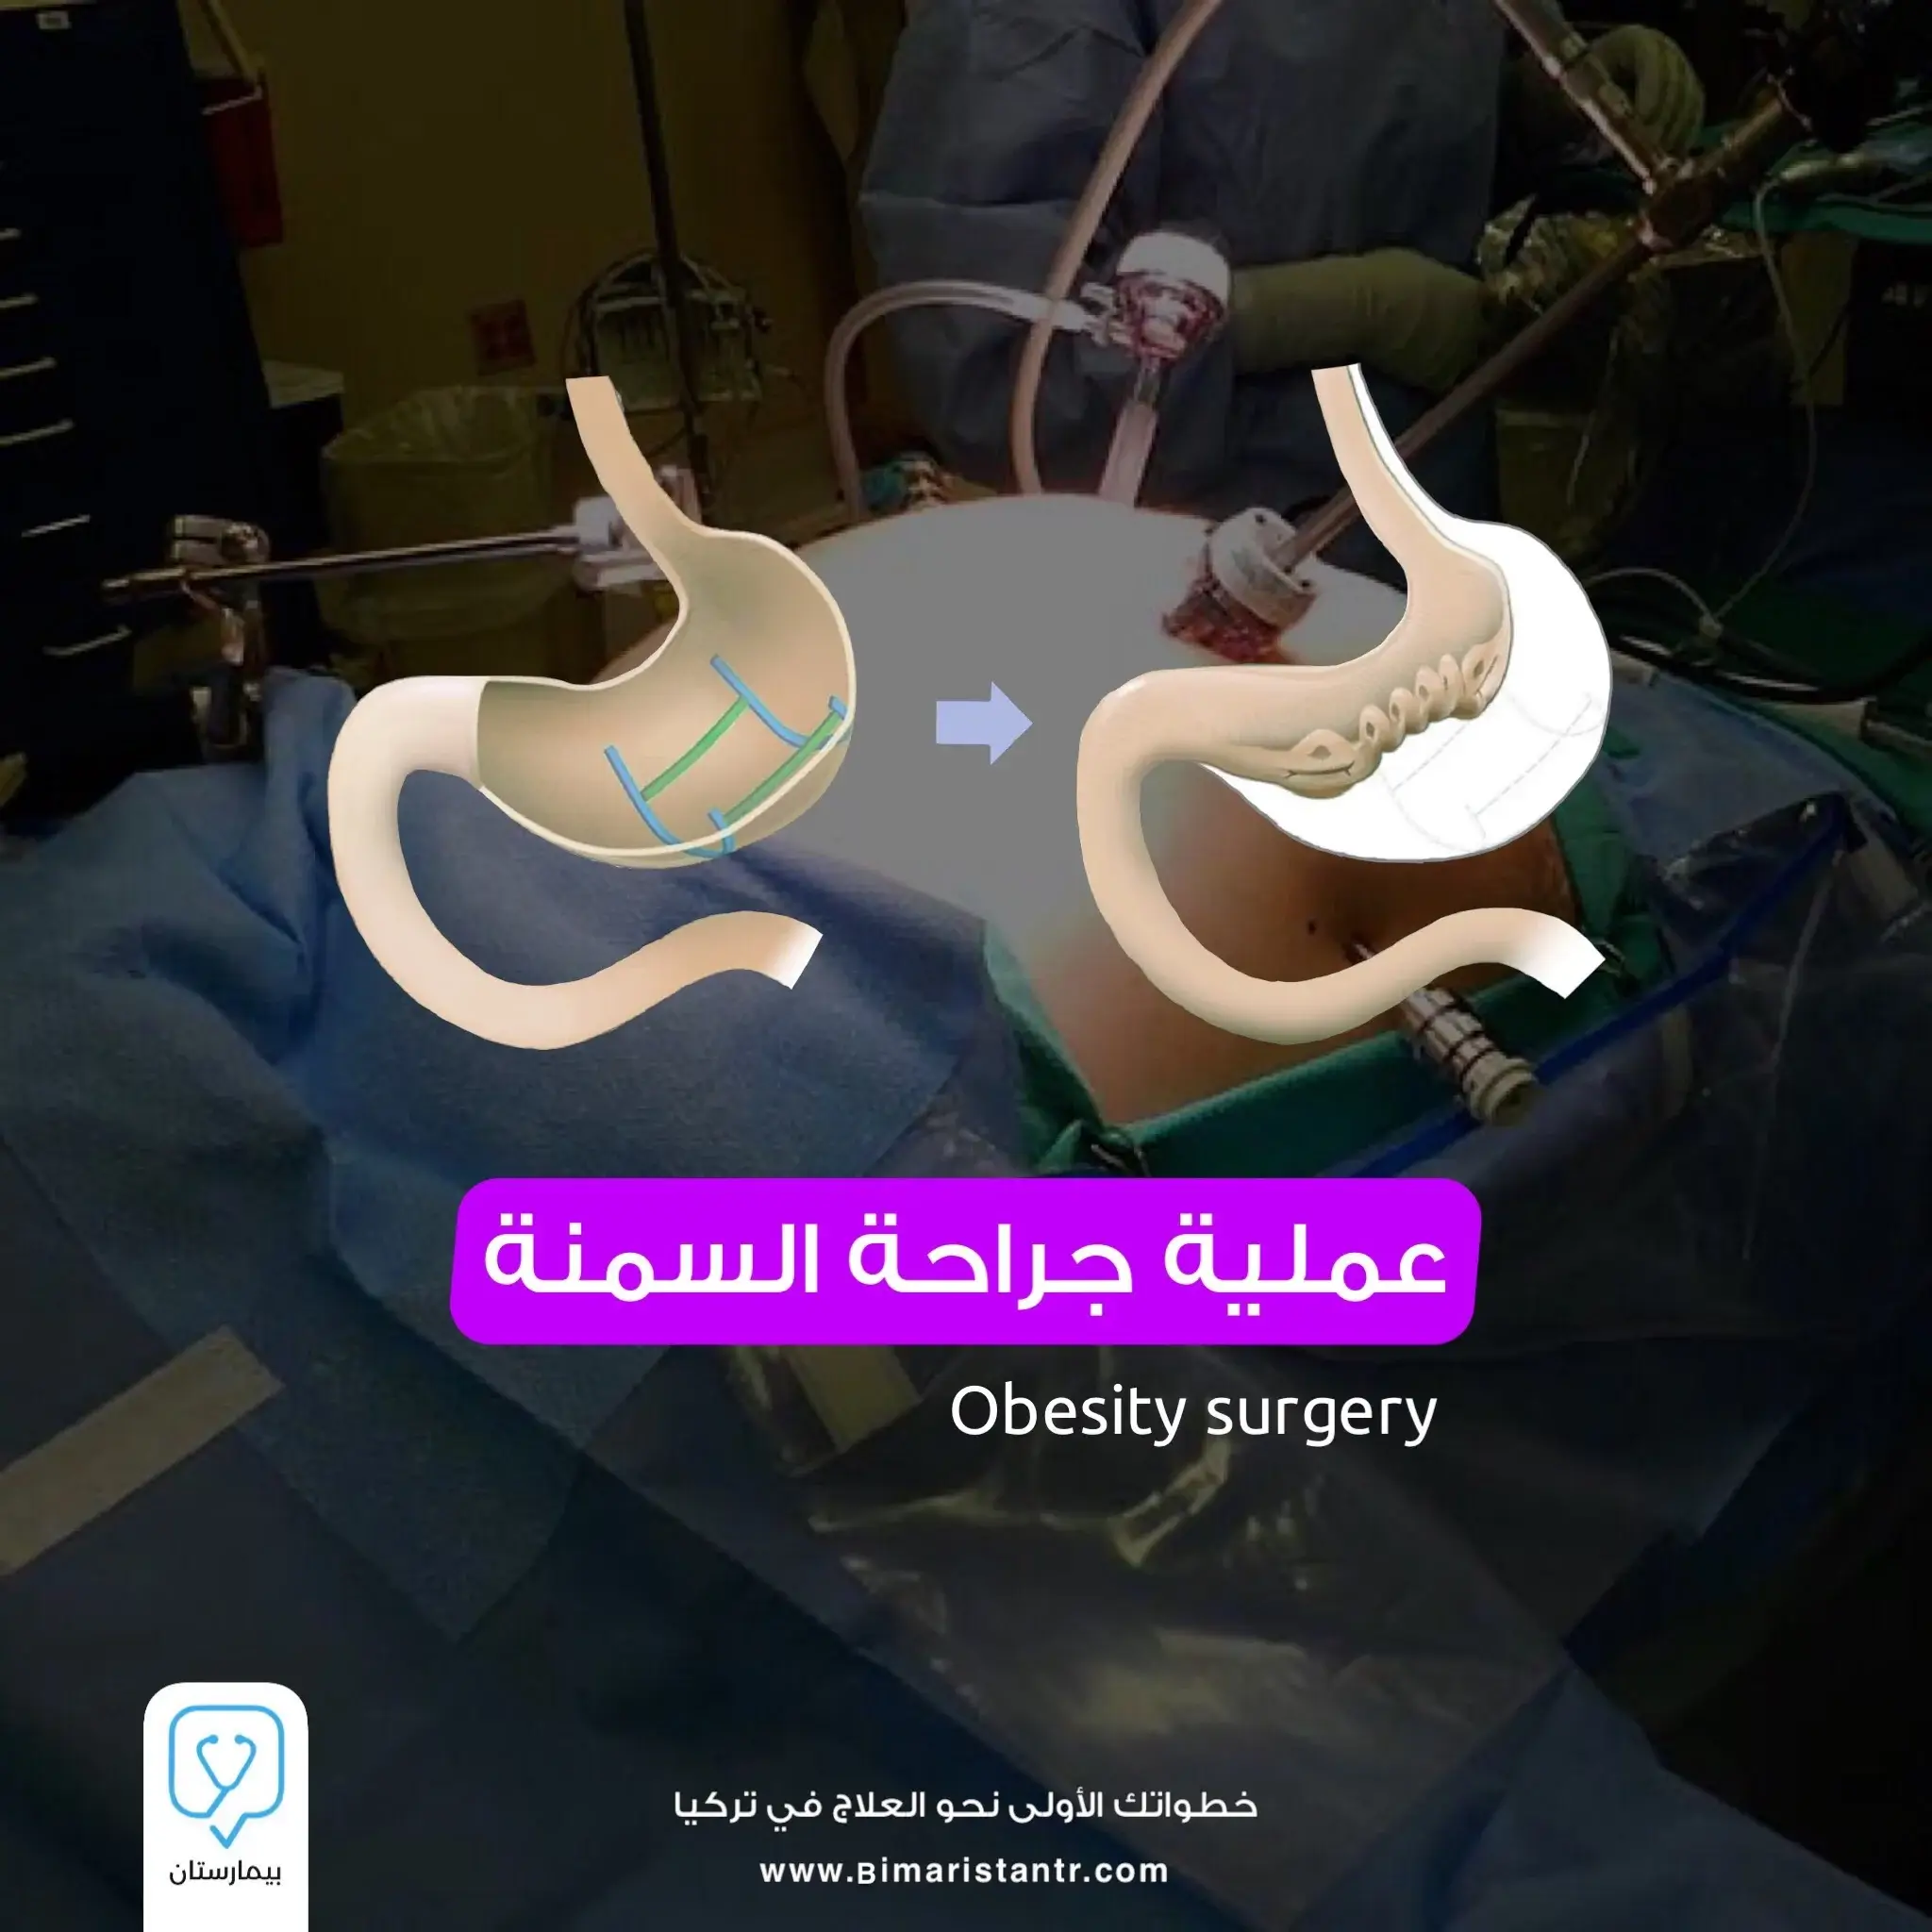 Obesity surgery